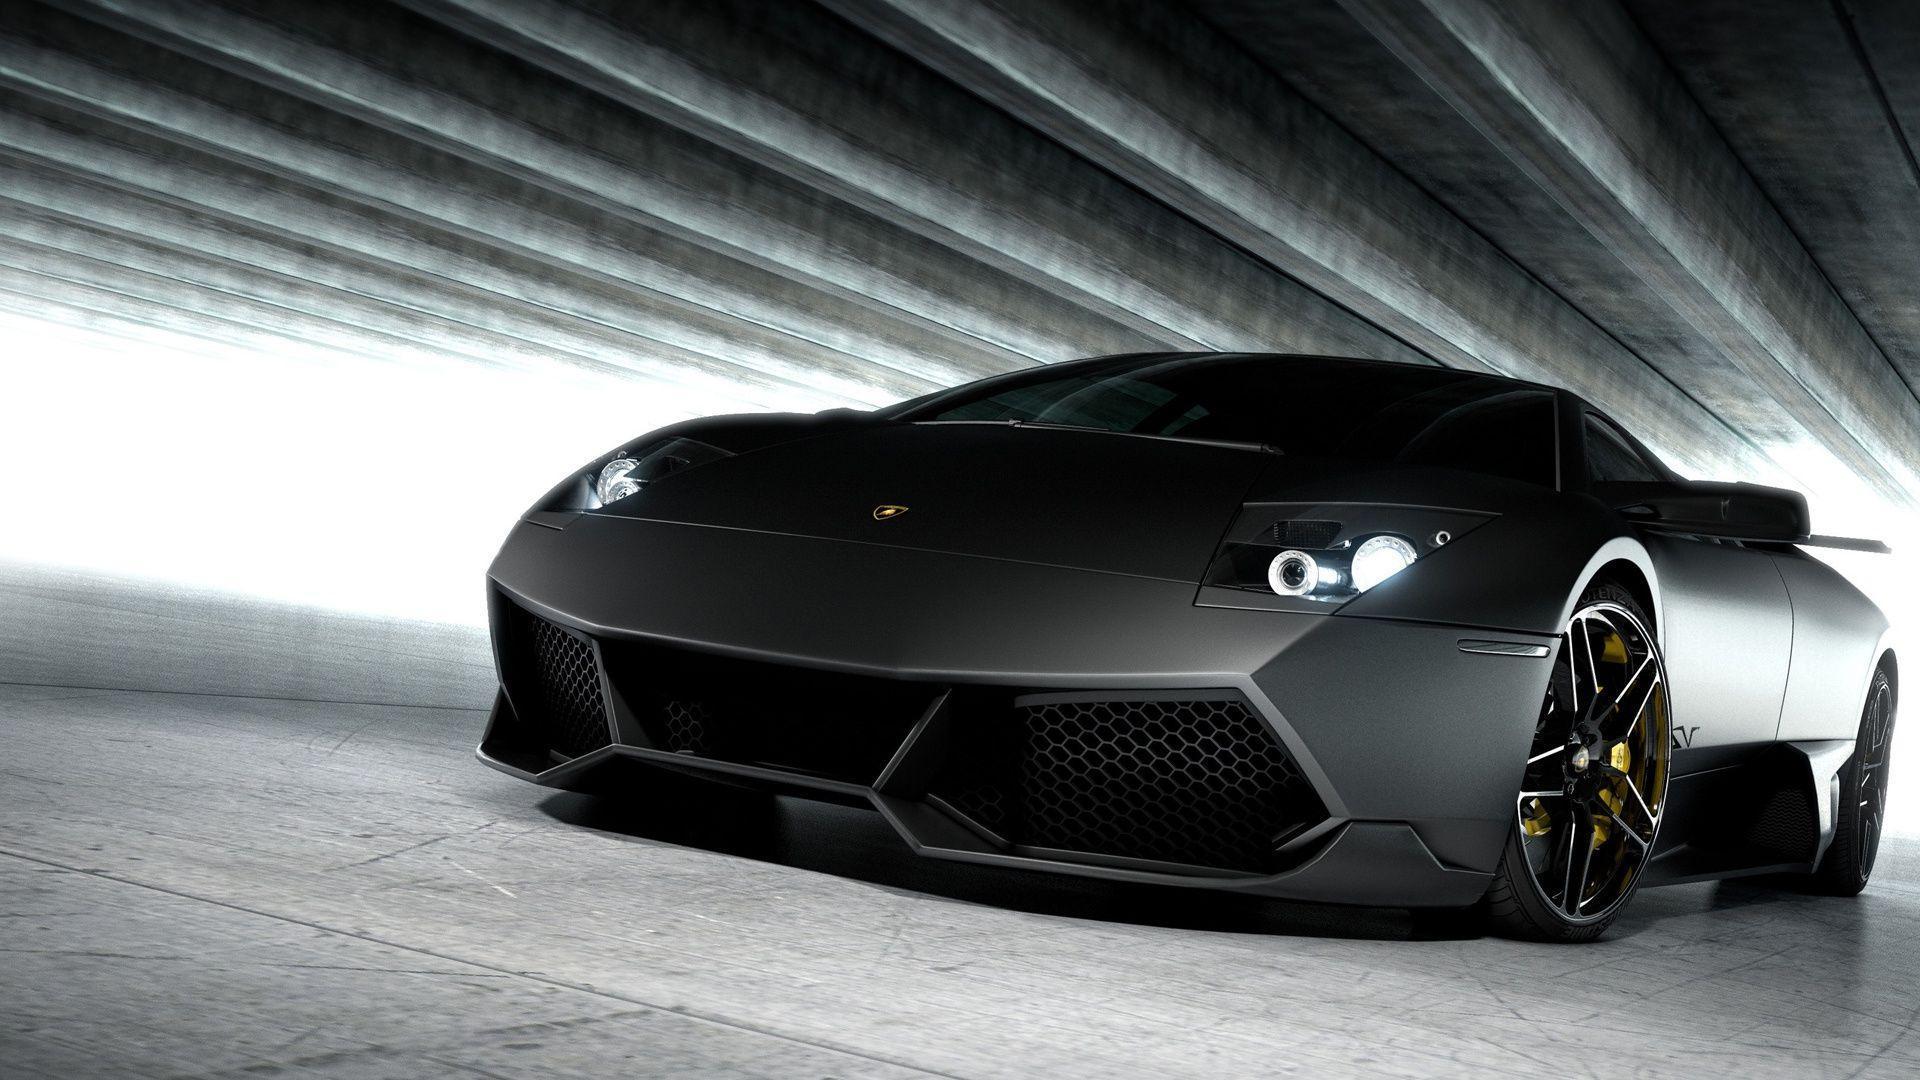 Stunning Lamborghini Wallpaper 1080p Cars. HD Wallpaper Source